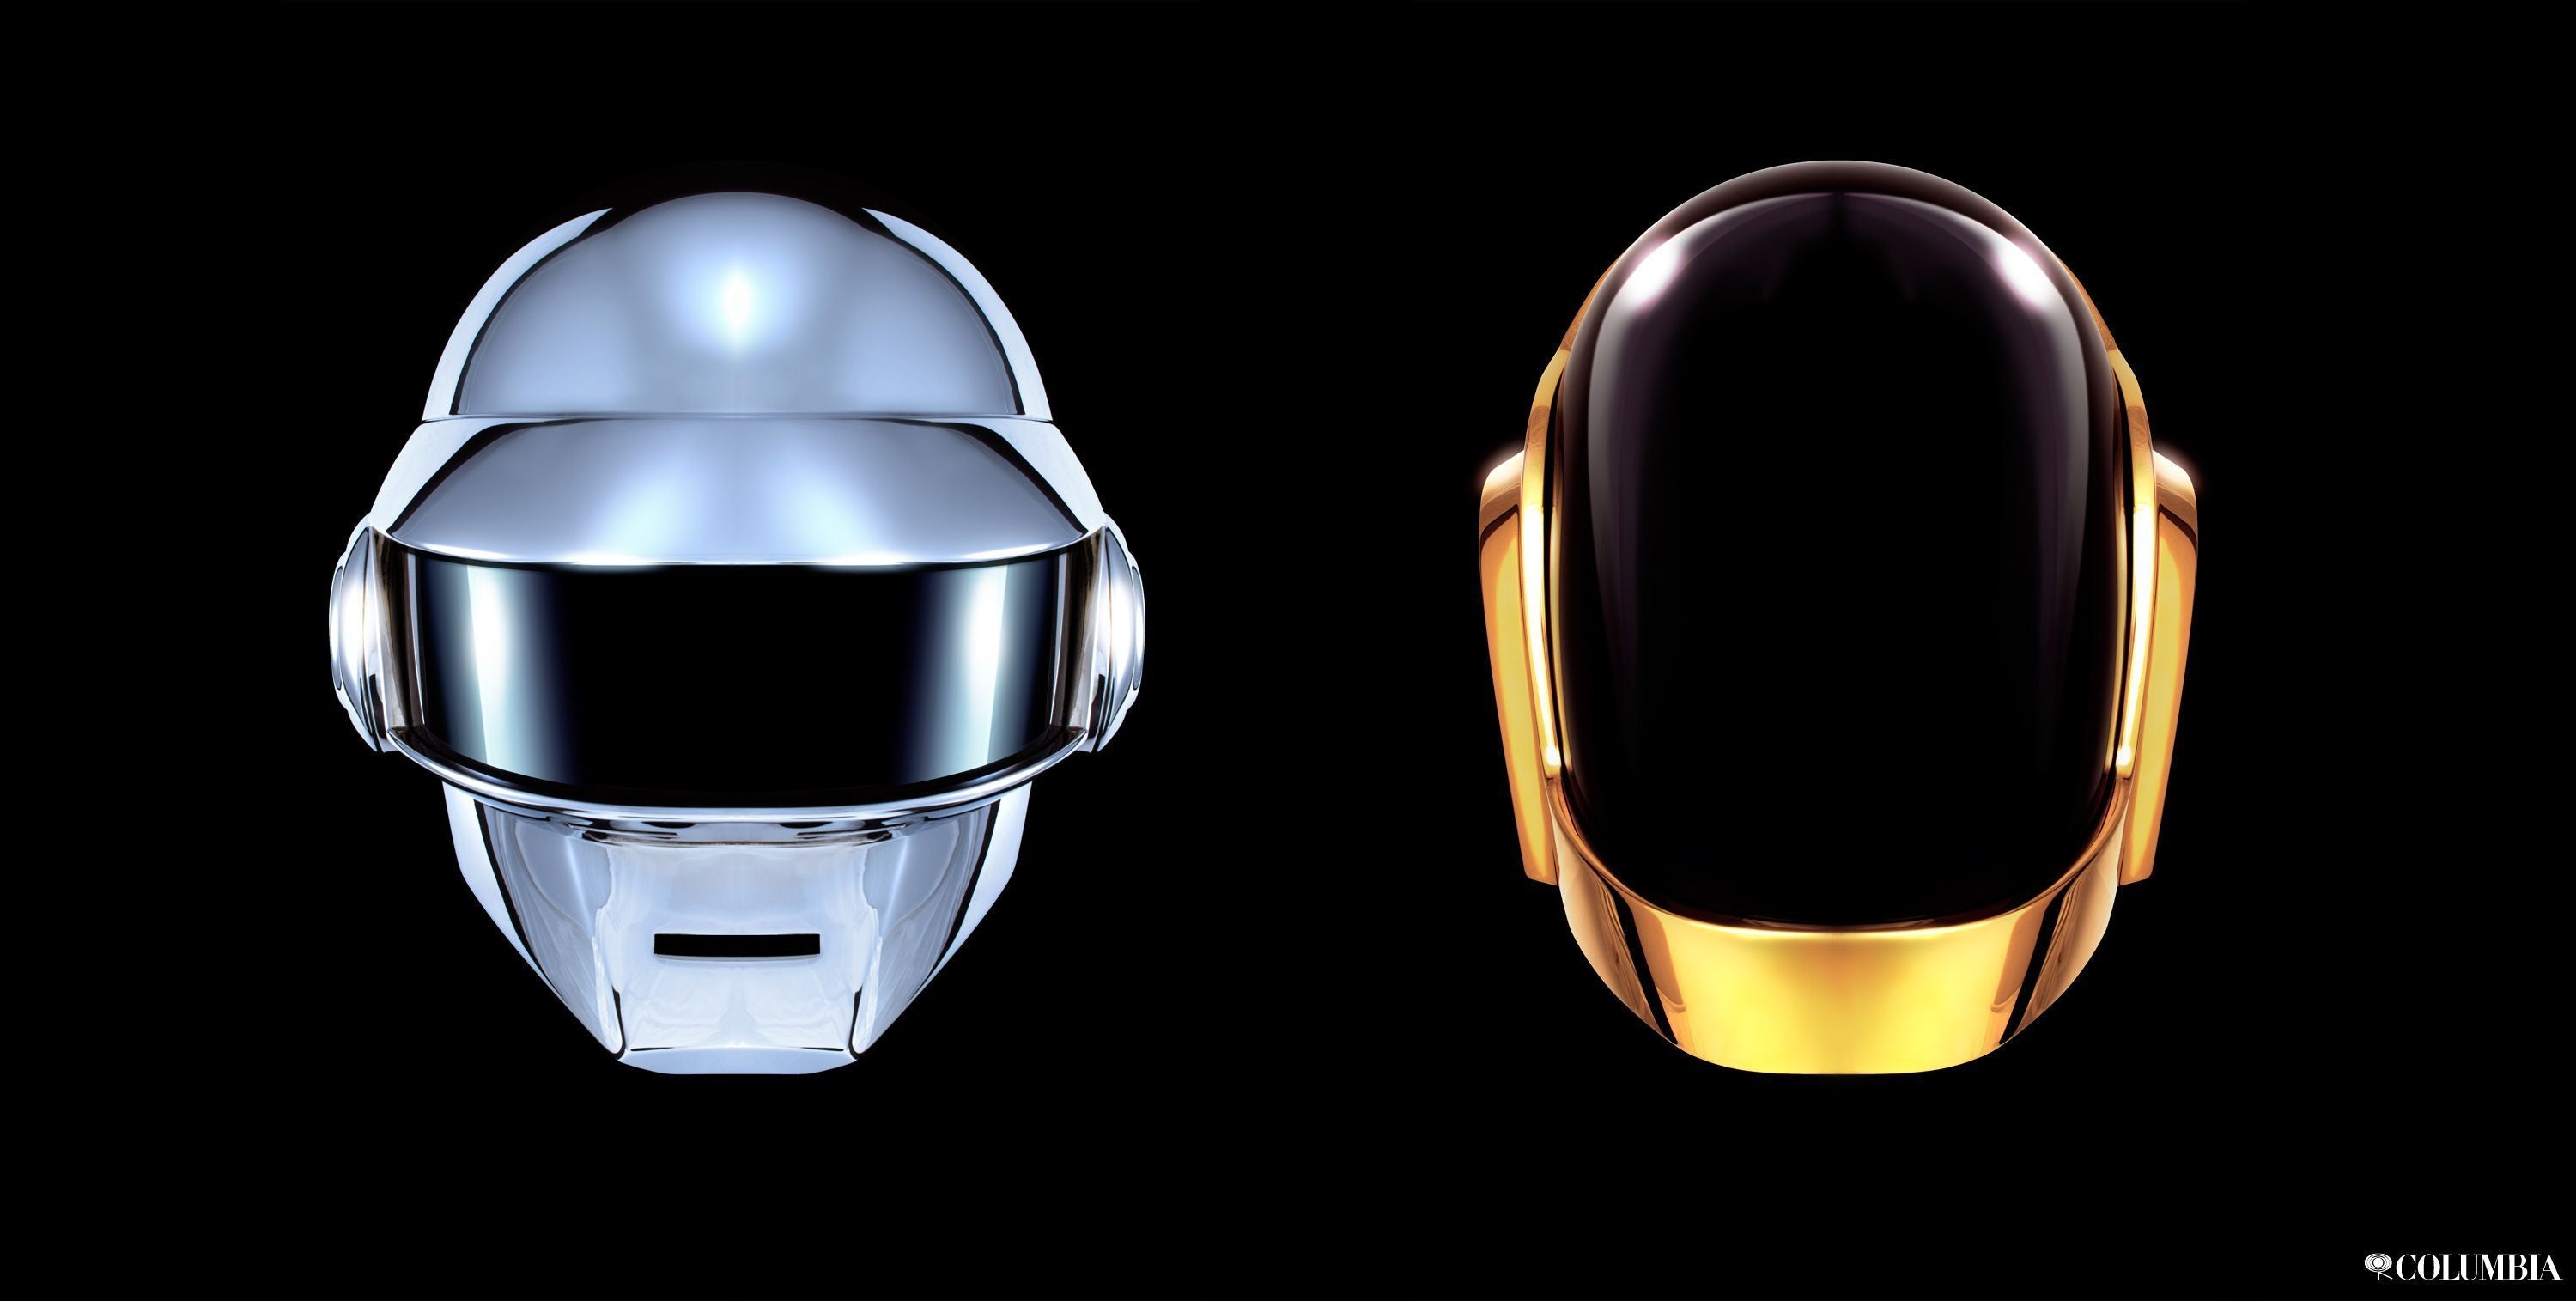 The importance of details: Daft Punk's Random Access Memories